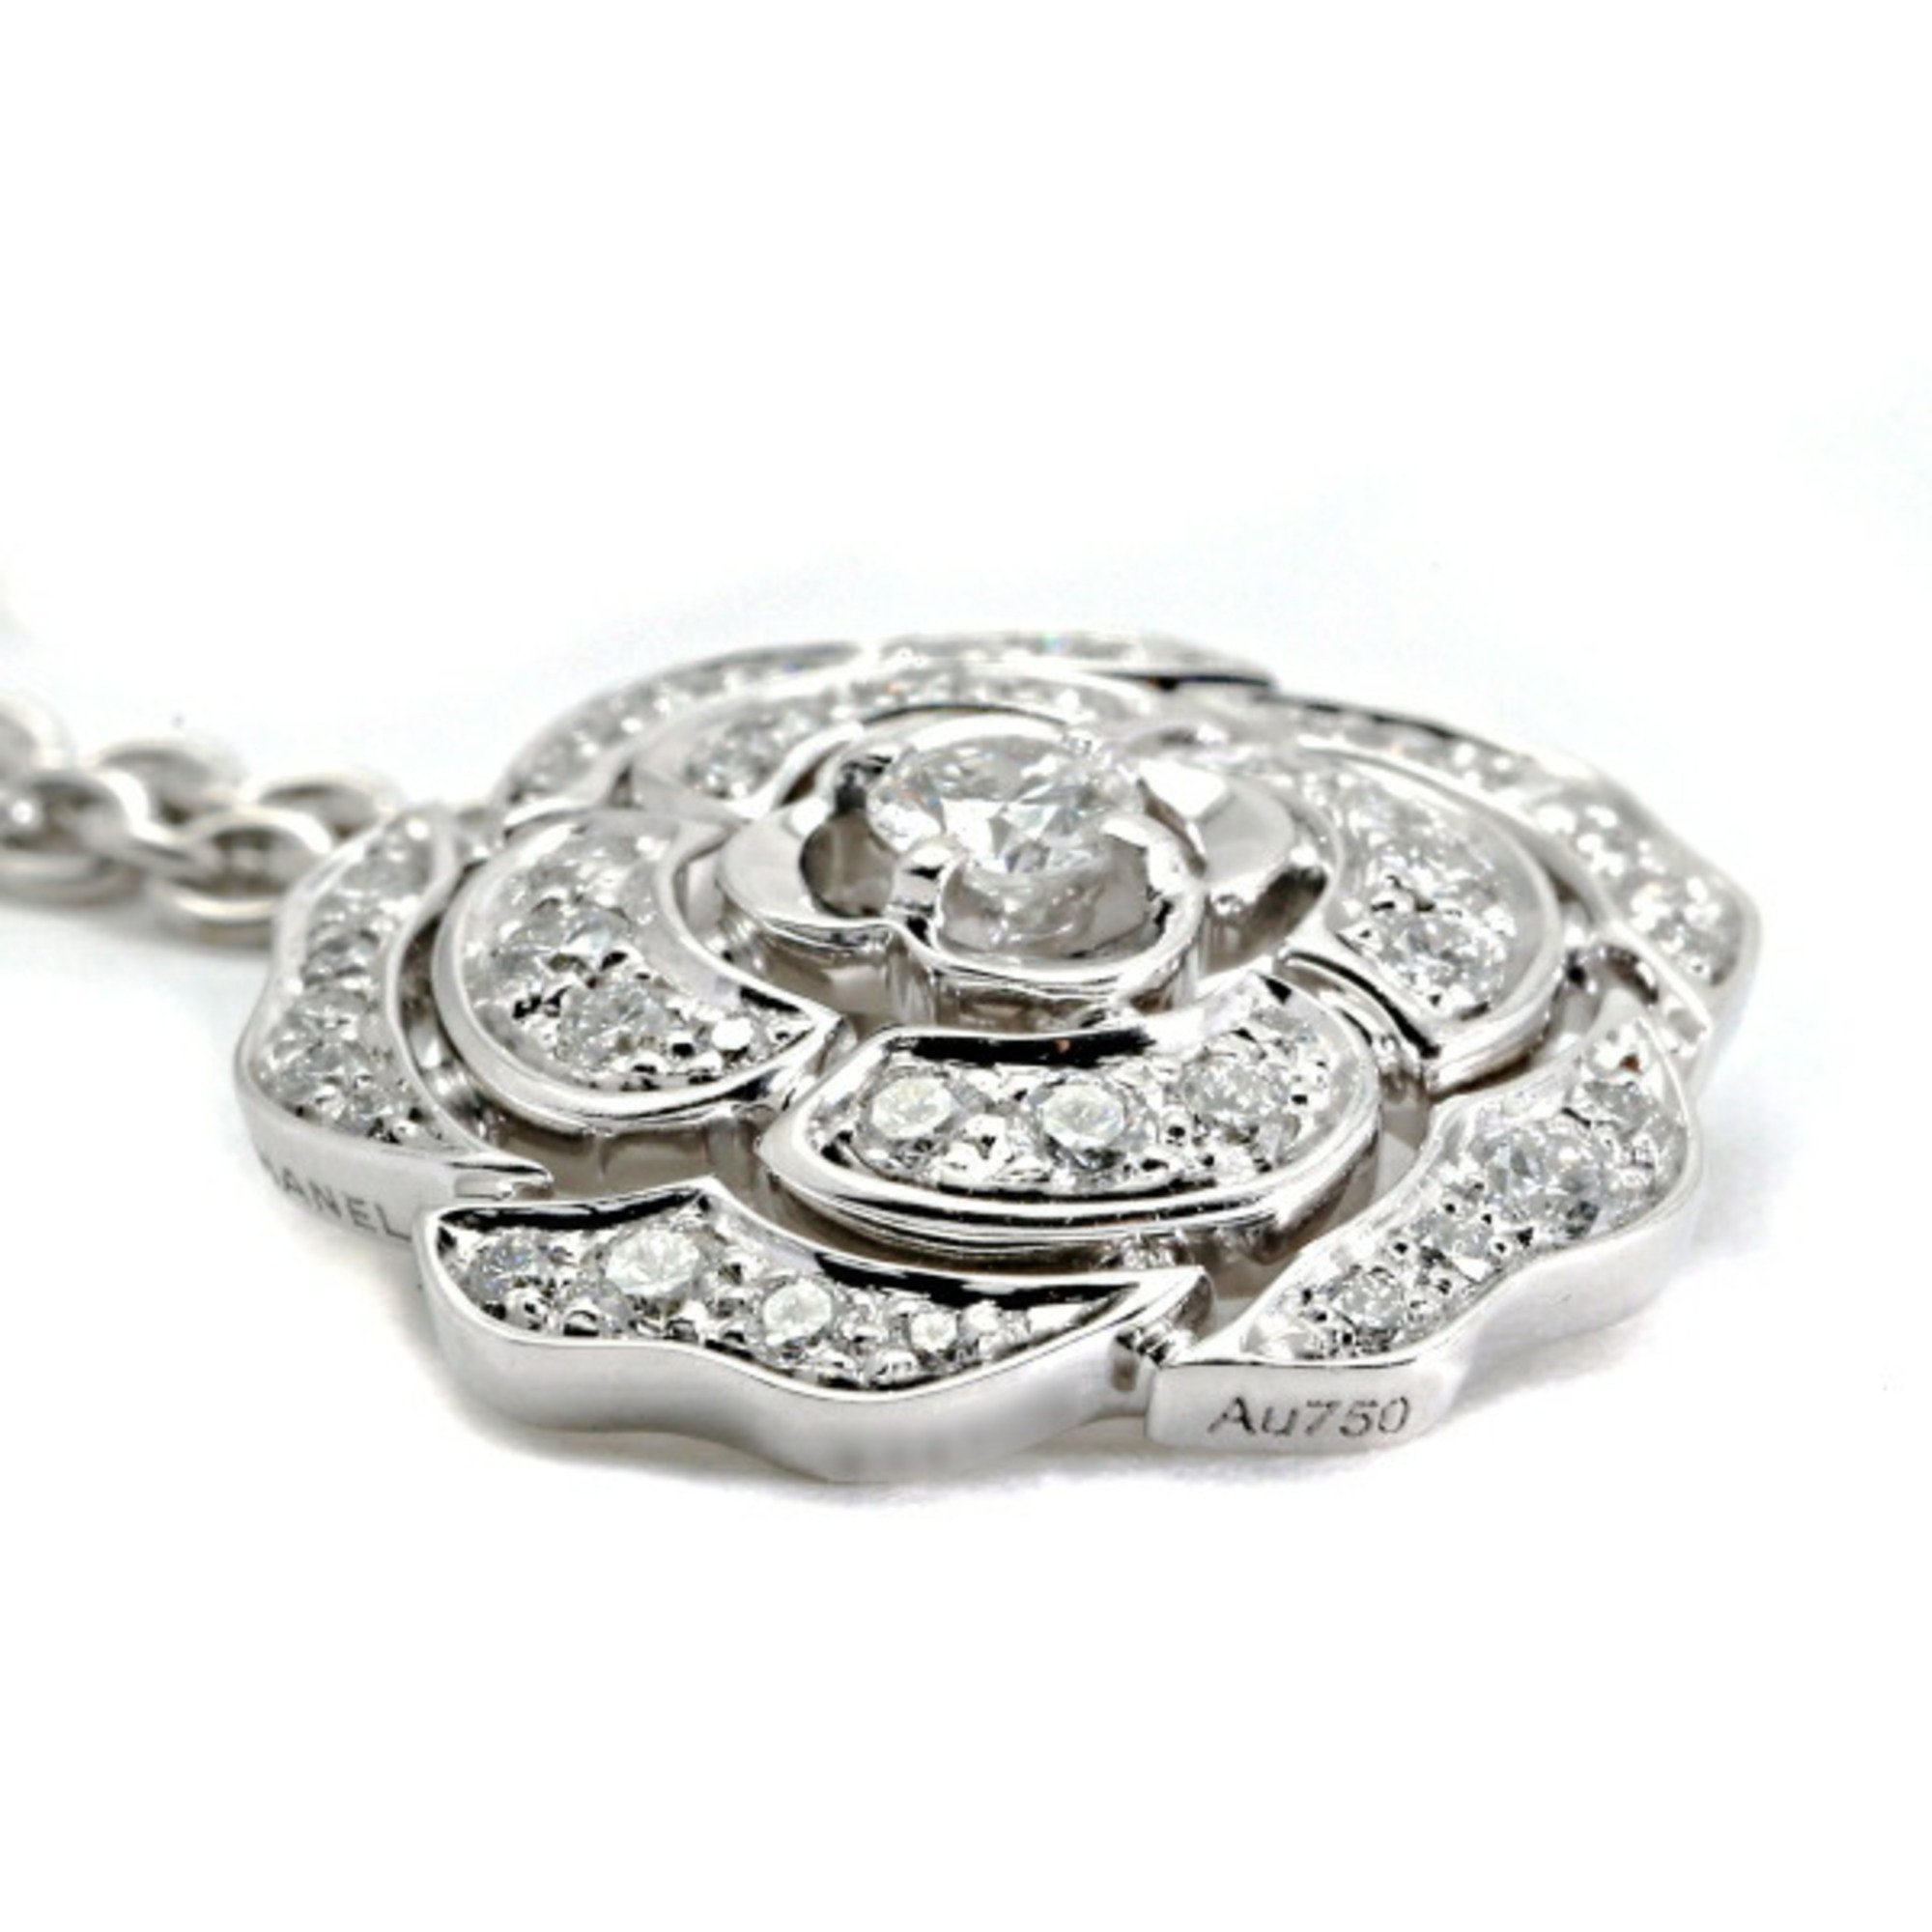 Chanel Camellia K18WG White Gold Necklace J379211